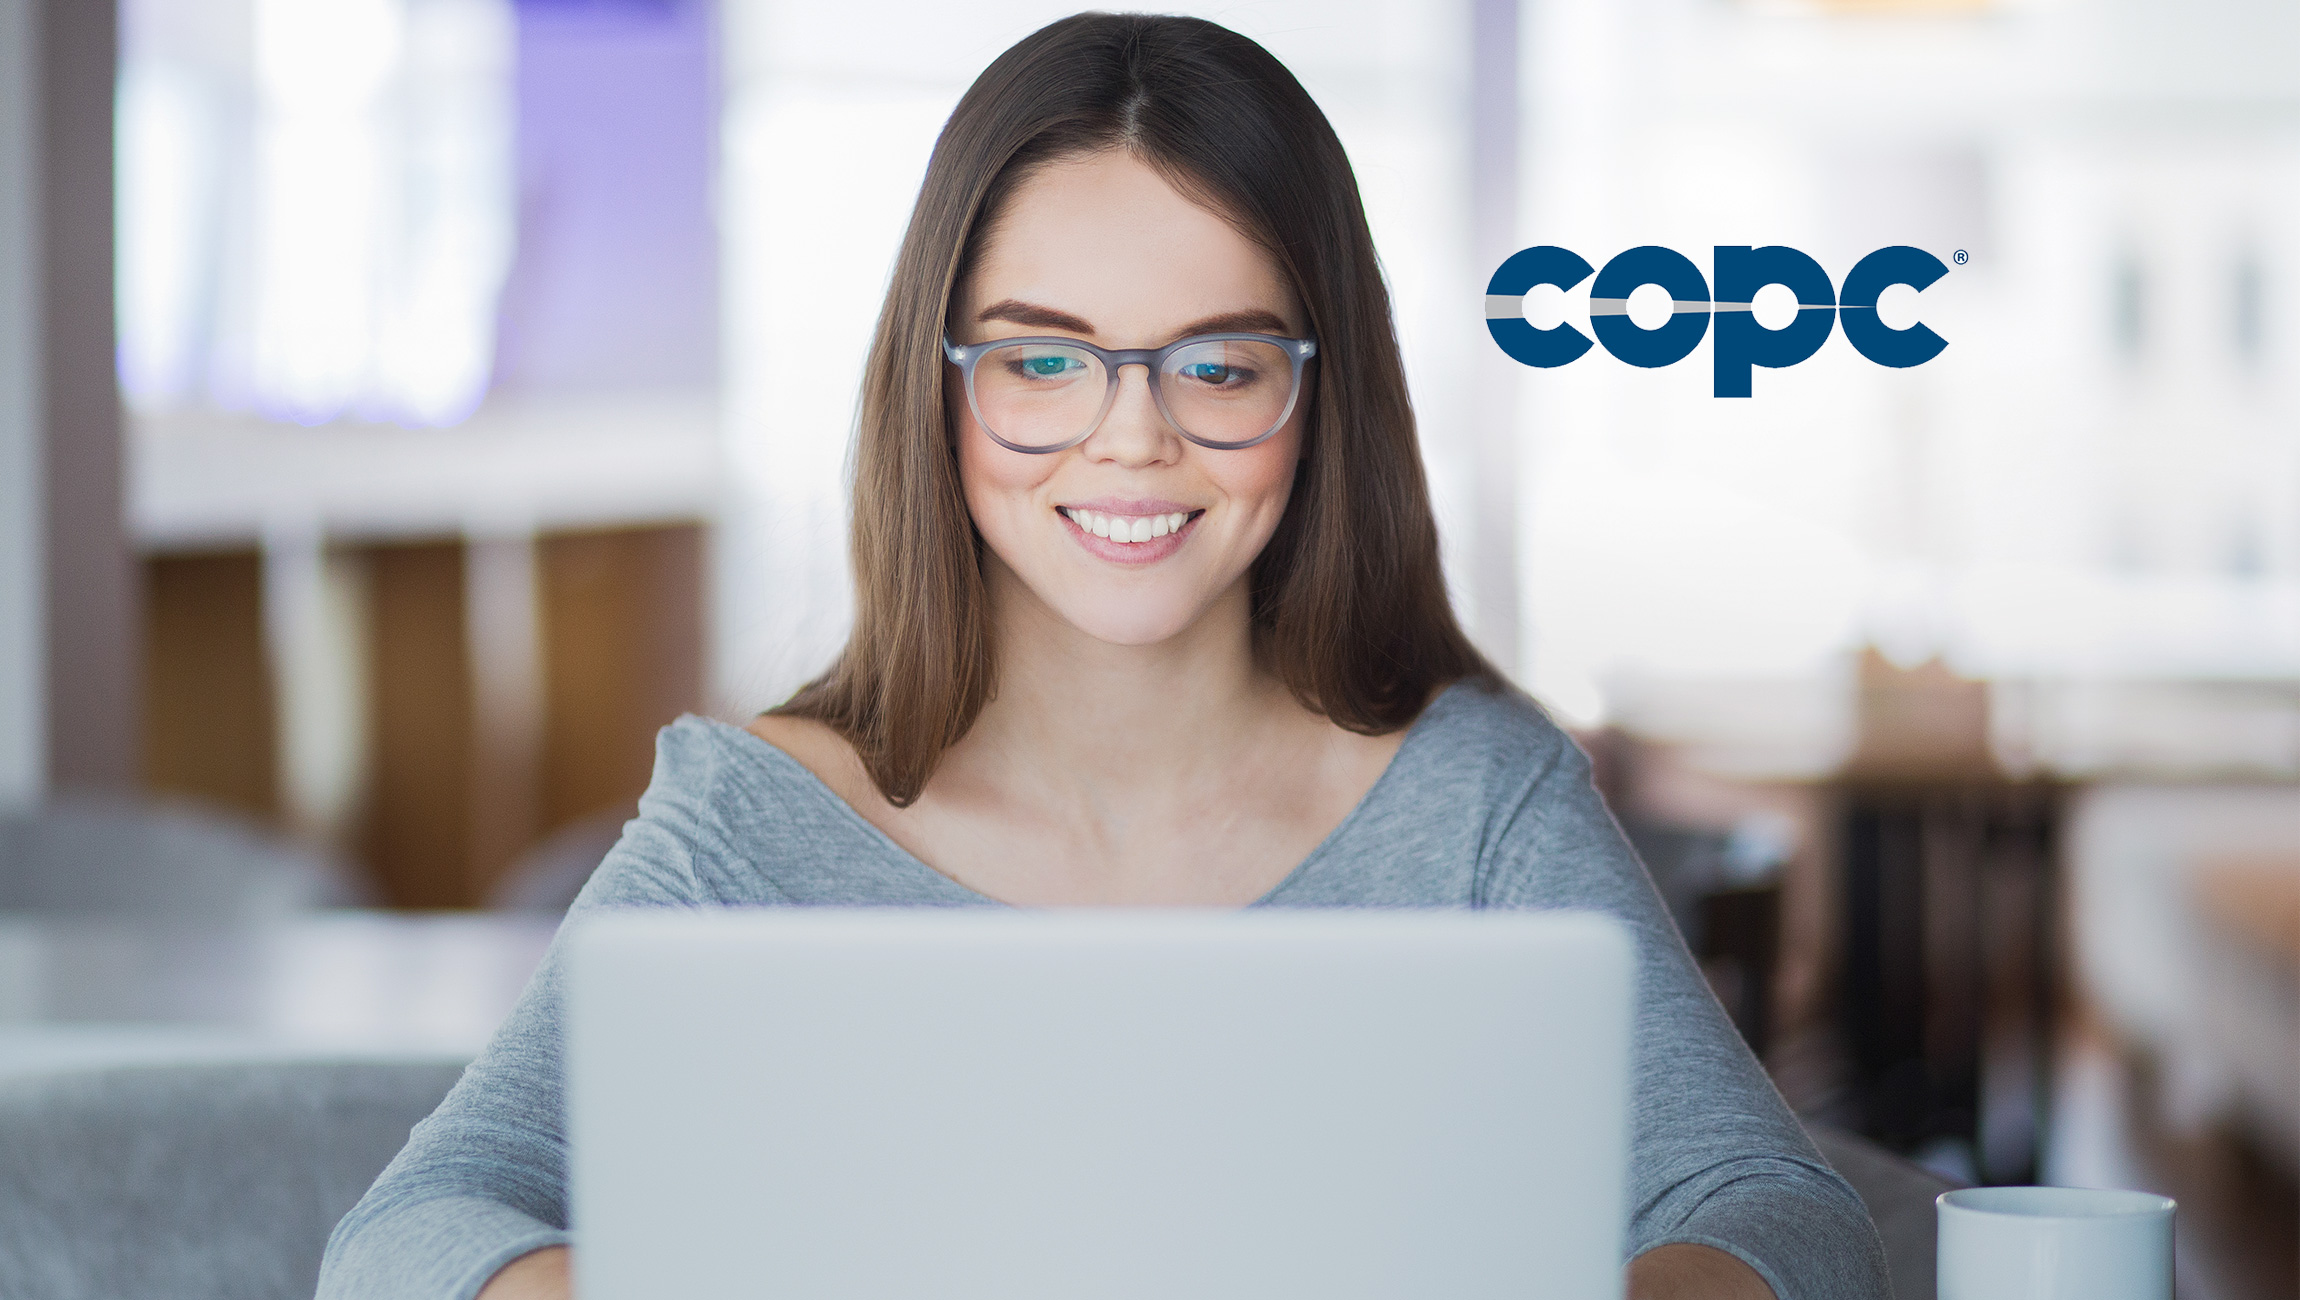 COPC Inc. Announces its 2019 Global Public Training Calendar for Customer Experience Management Professionals